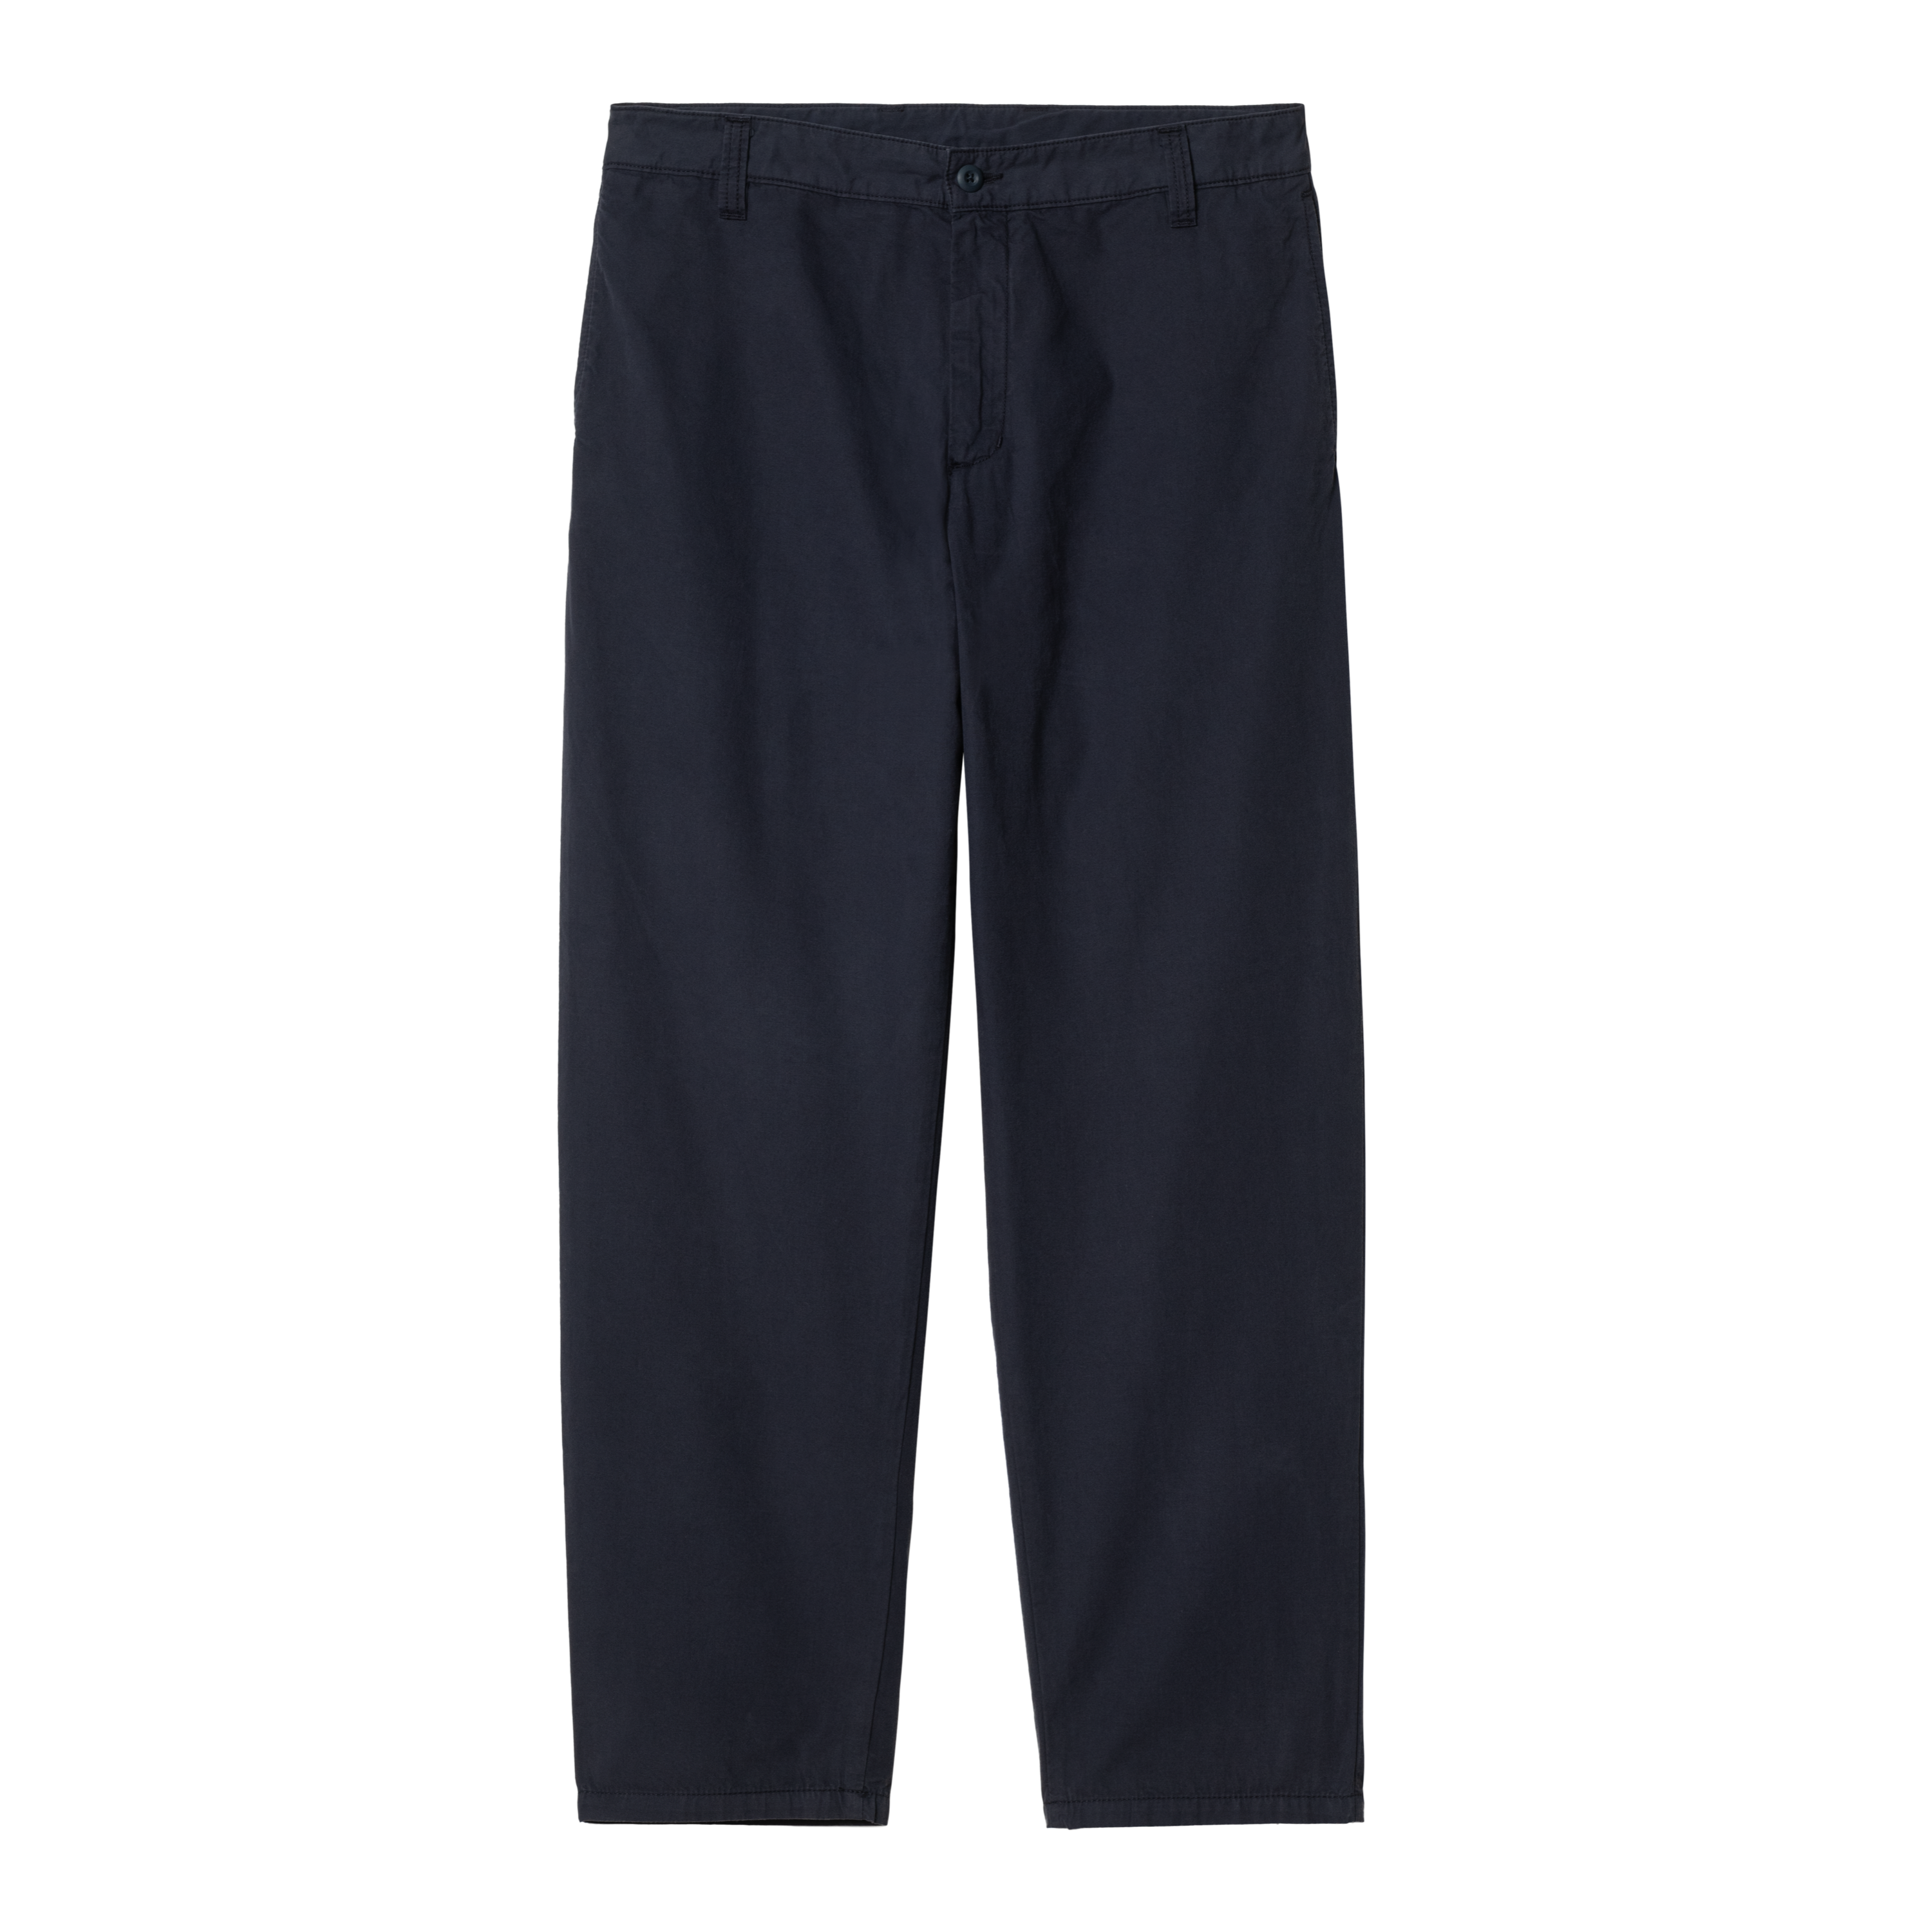 Carhartt WIP - CALDER PANT - Dark Navy (garment dyed) 